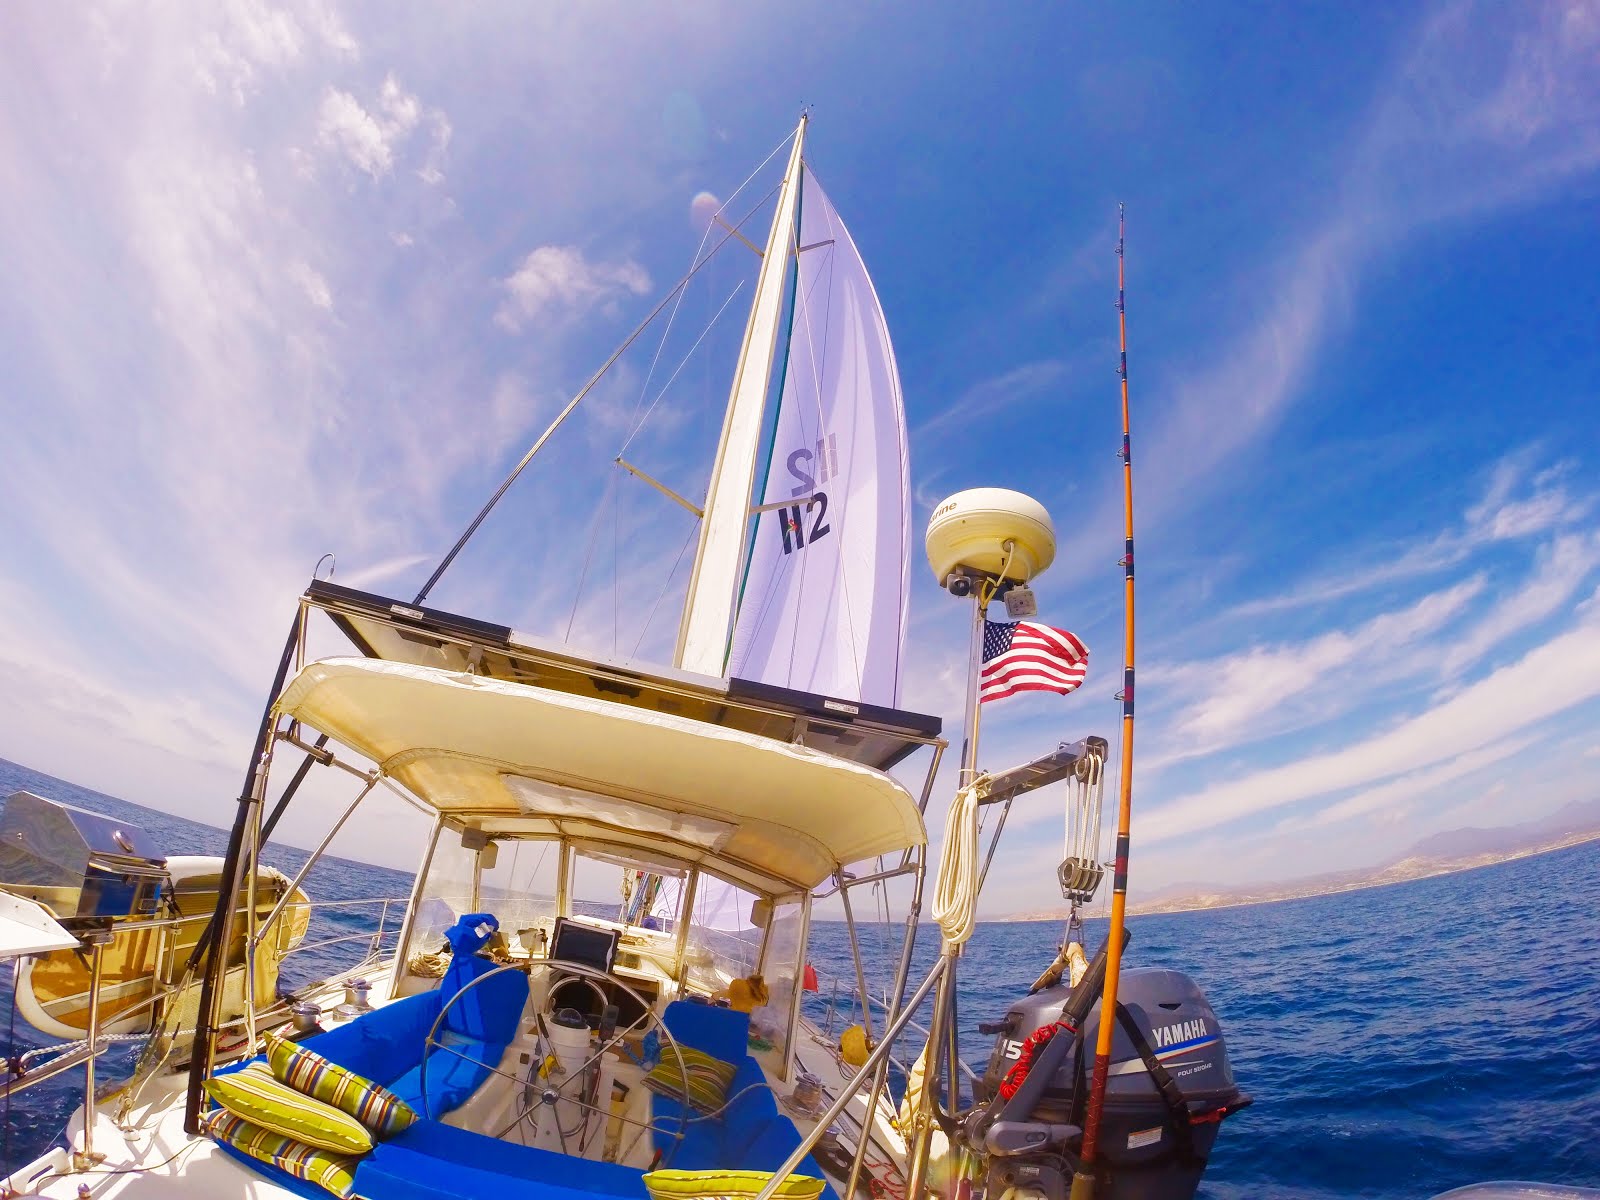 SV Liahona under sail near Cabo